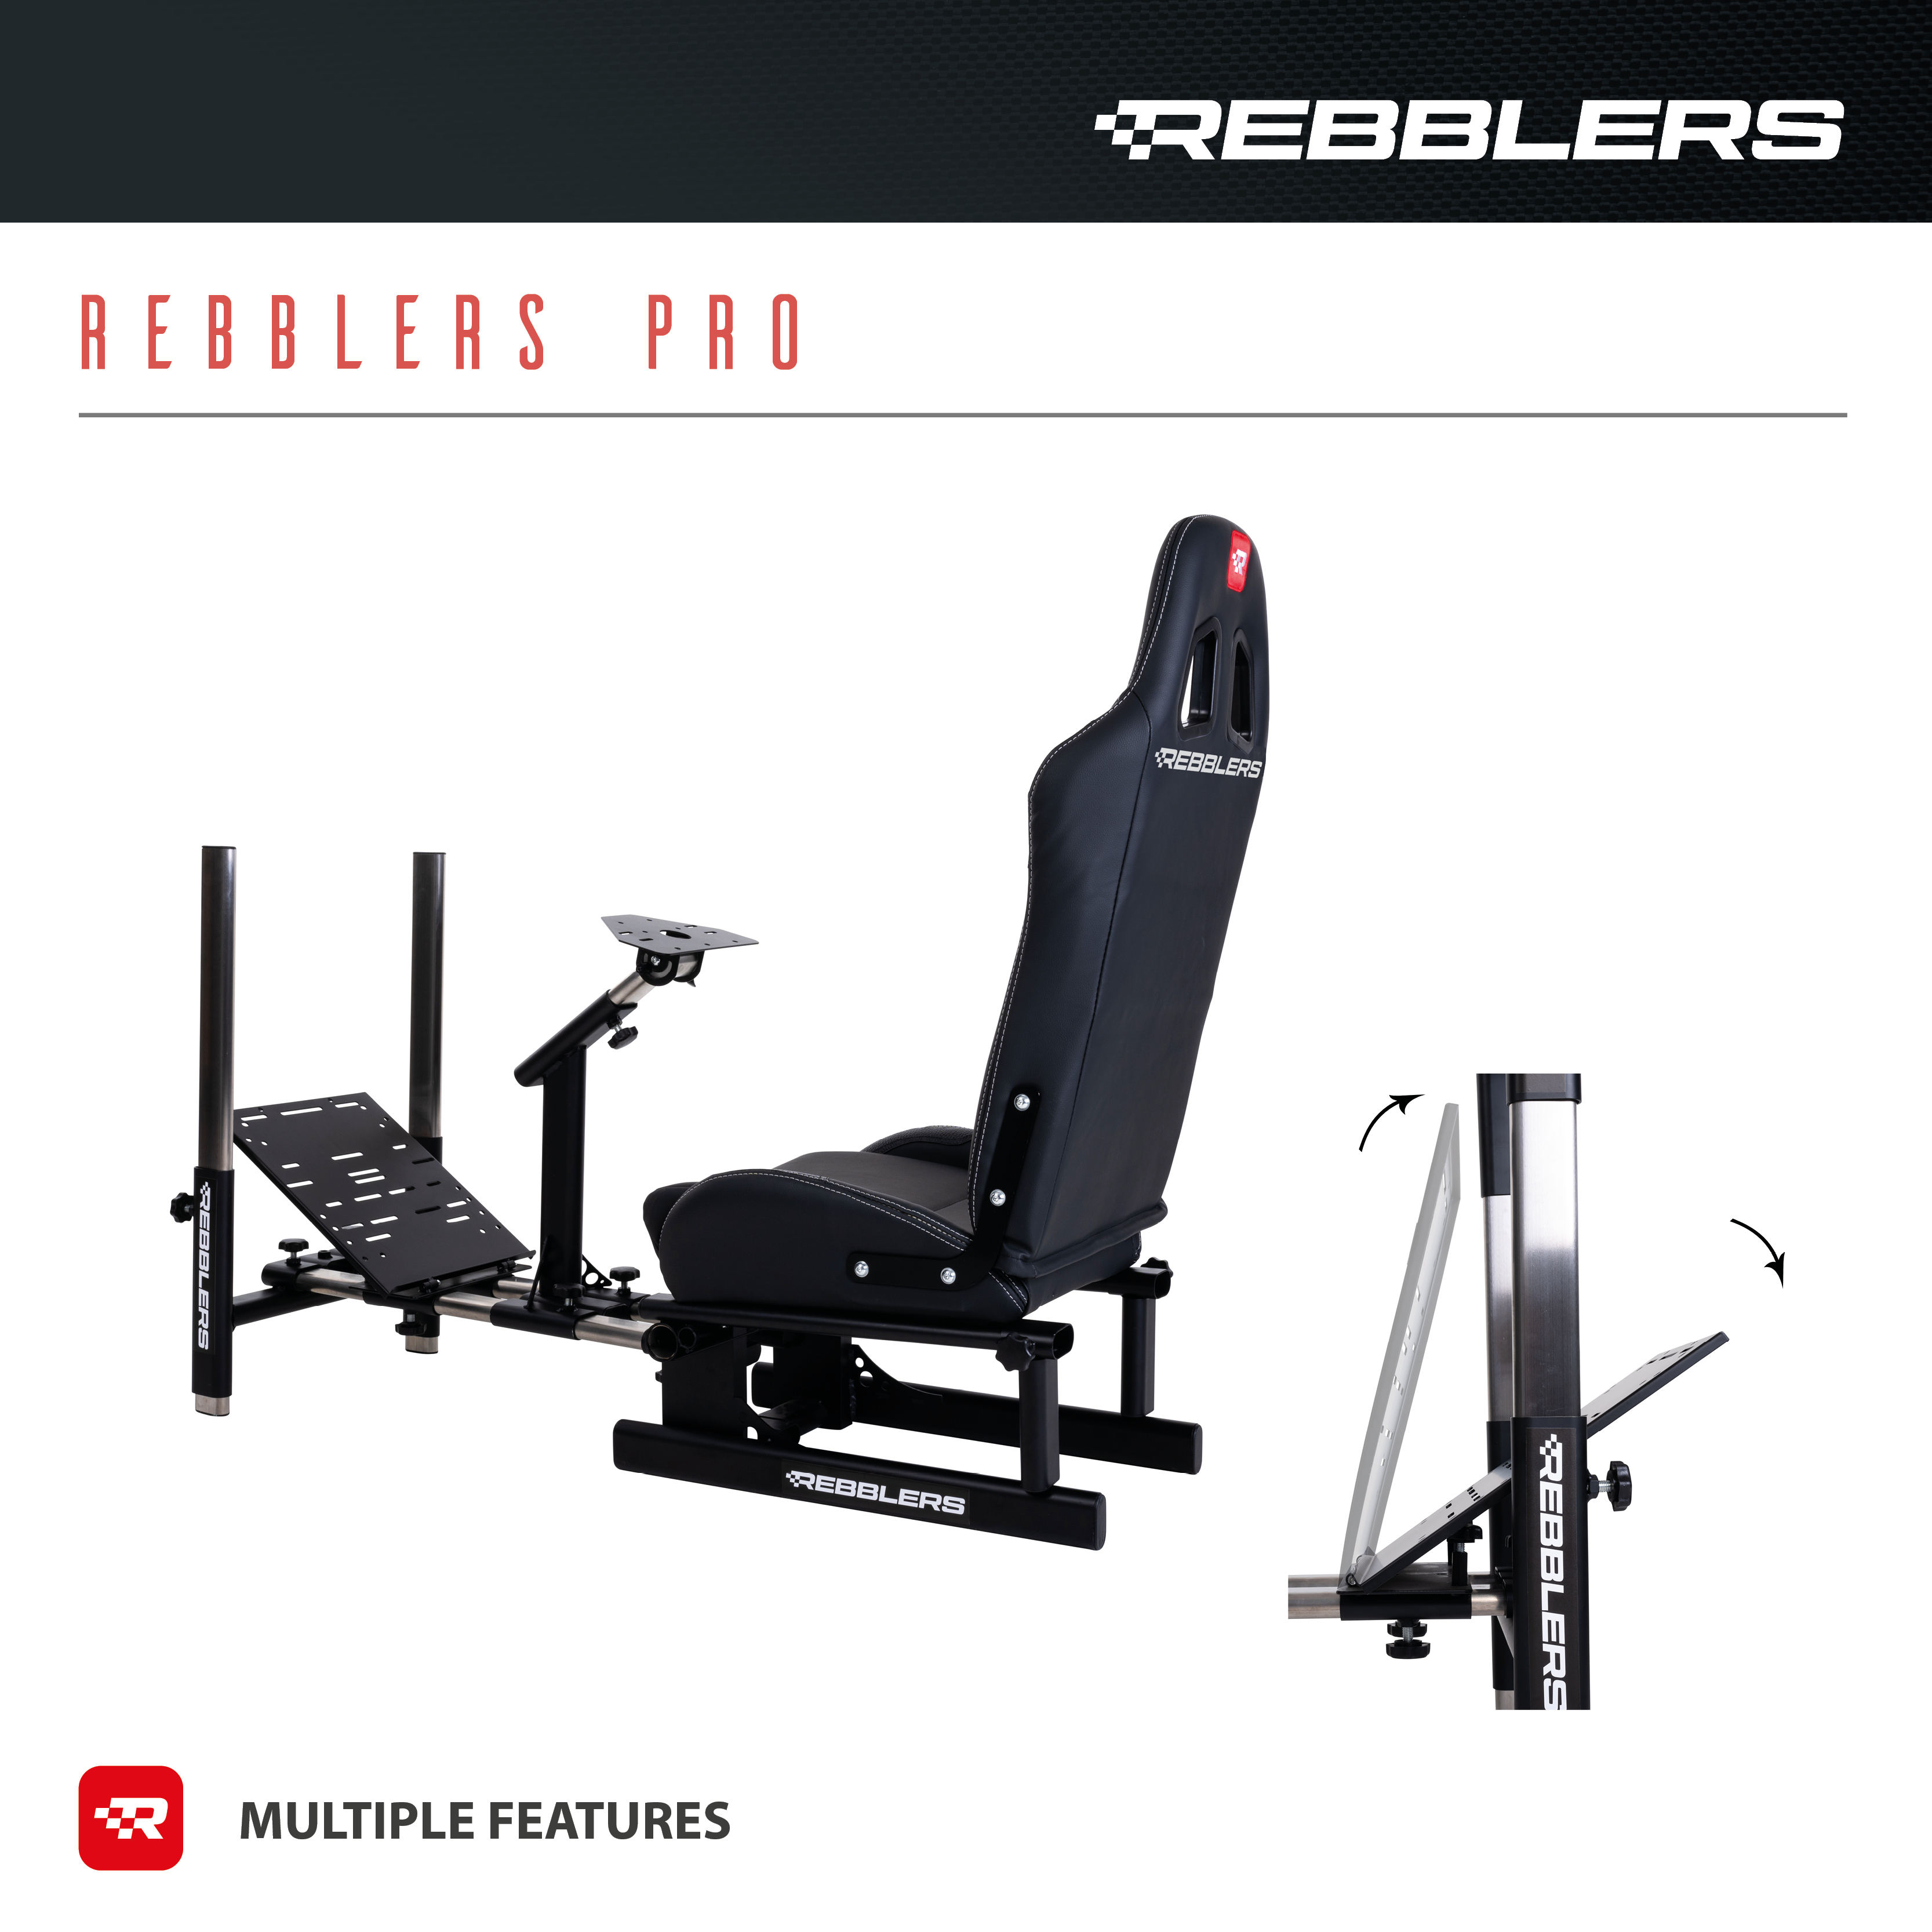 REBBLERS PRO Gaming-Stuhl, Schwarz